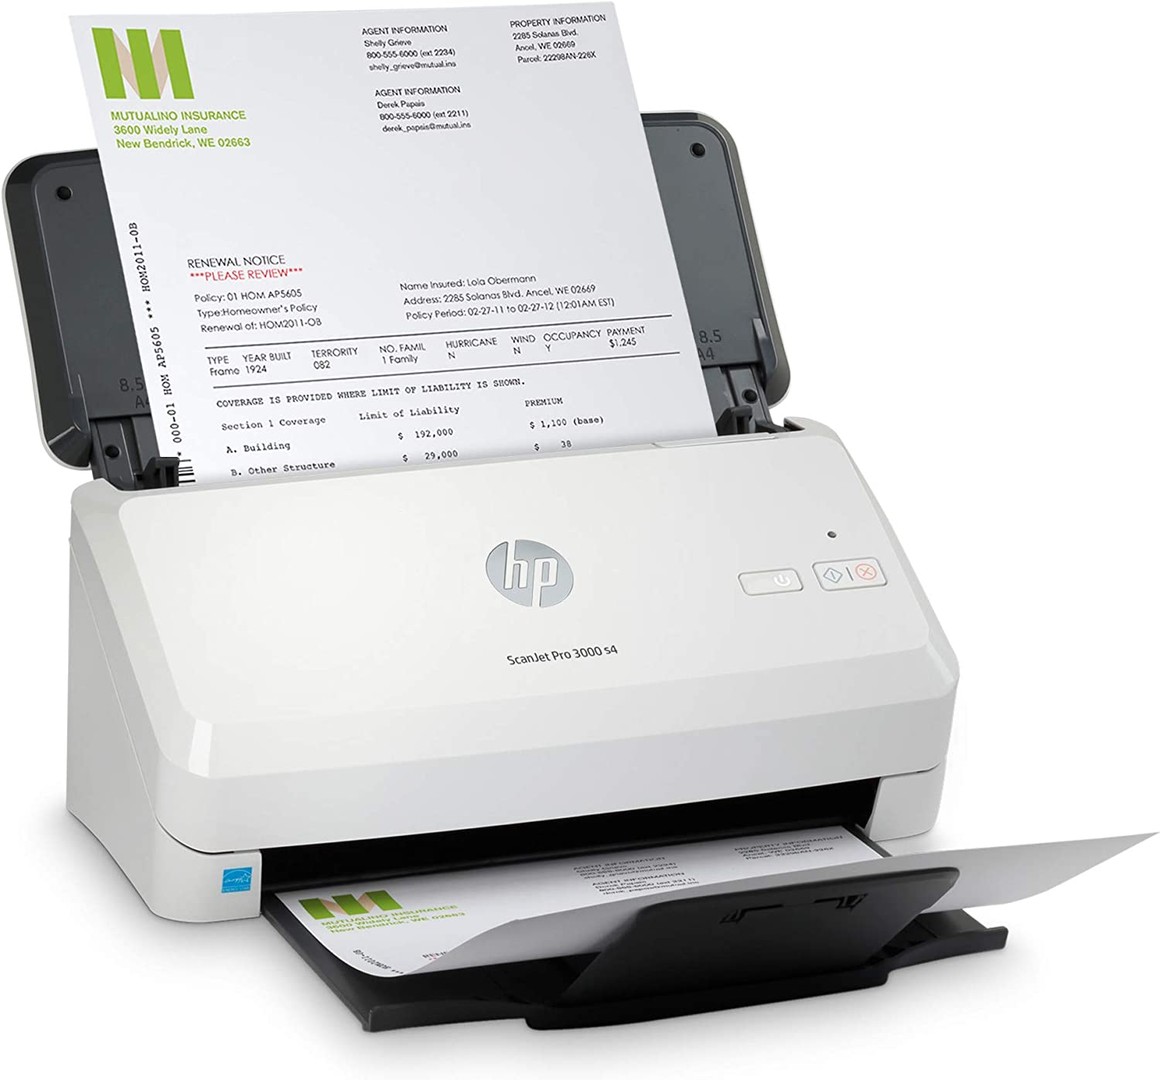 impresoras y scanners - SCANNER HP SCANJET PROFESSIONAL 3000 S4 - DOCUMENT SCANNER - 8.5 IN X 34 IN  0